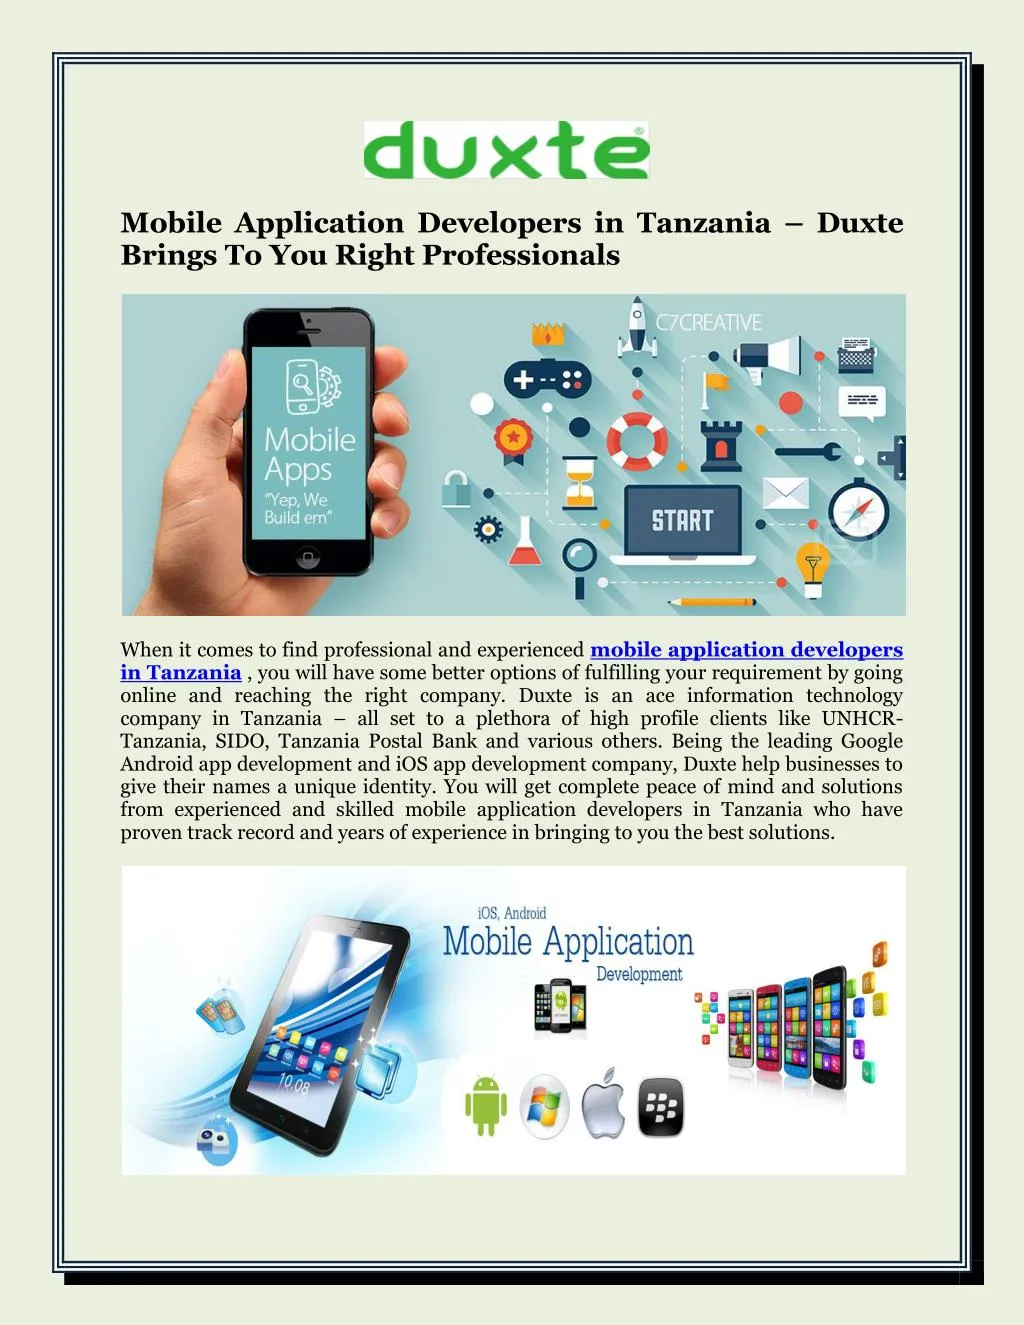 mobile application developers in tanzania duxte